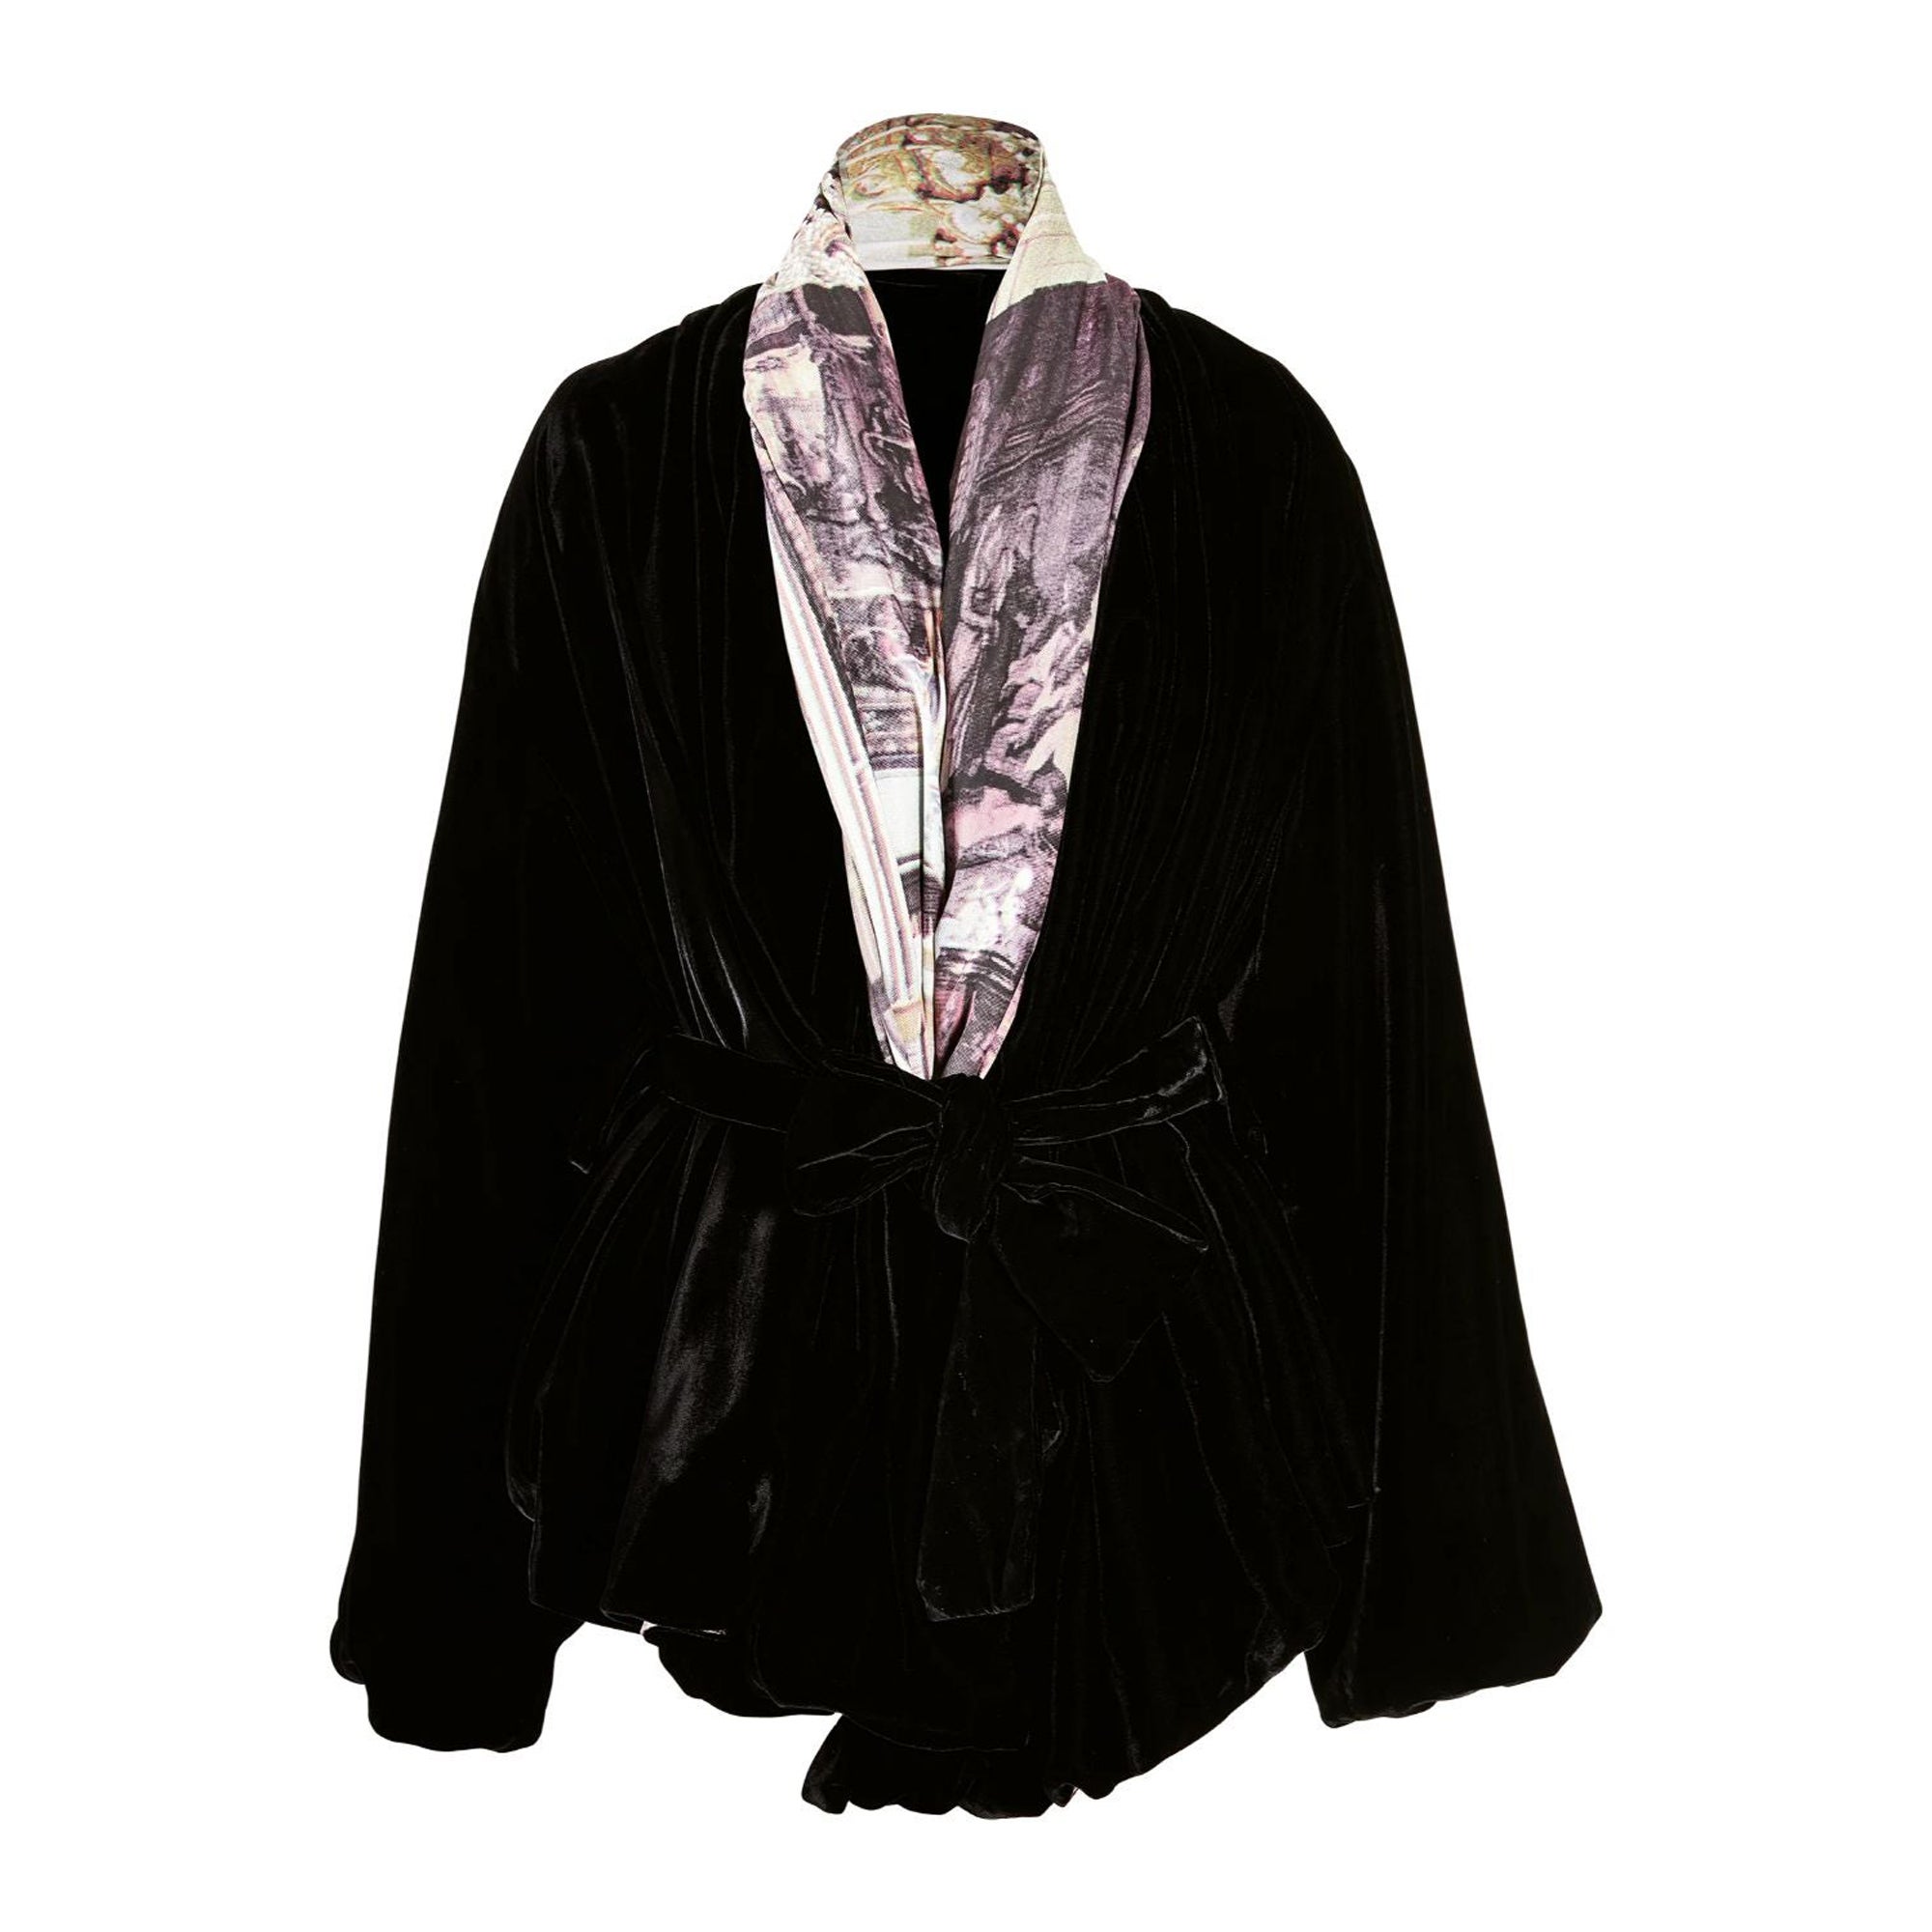 S/S 1992 Vivienne Westwood 'Salon' Collection Printed Velvet Shawl Jacket